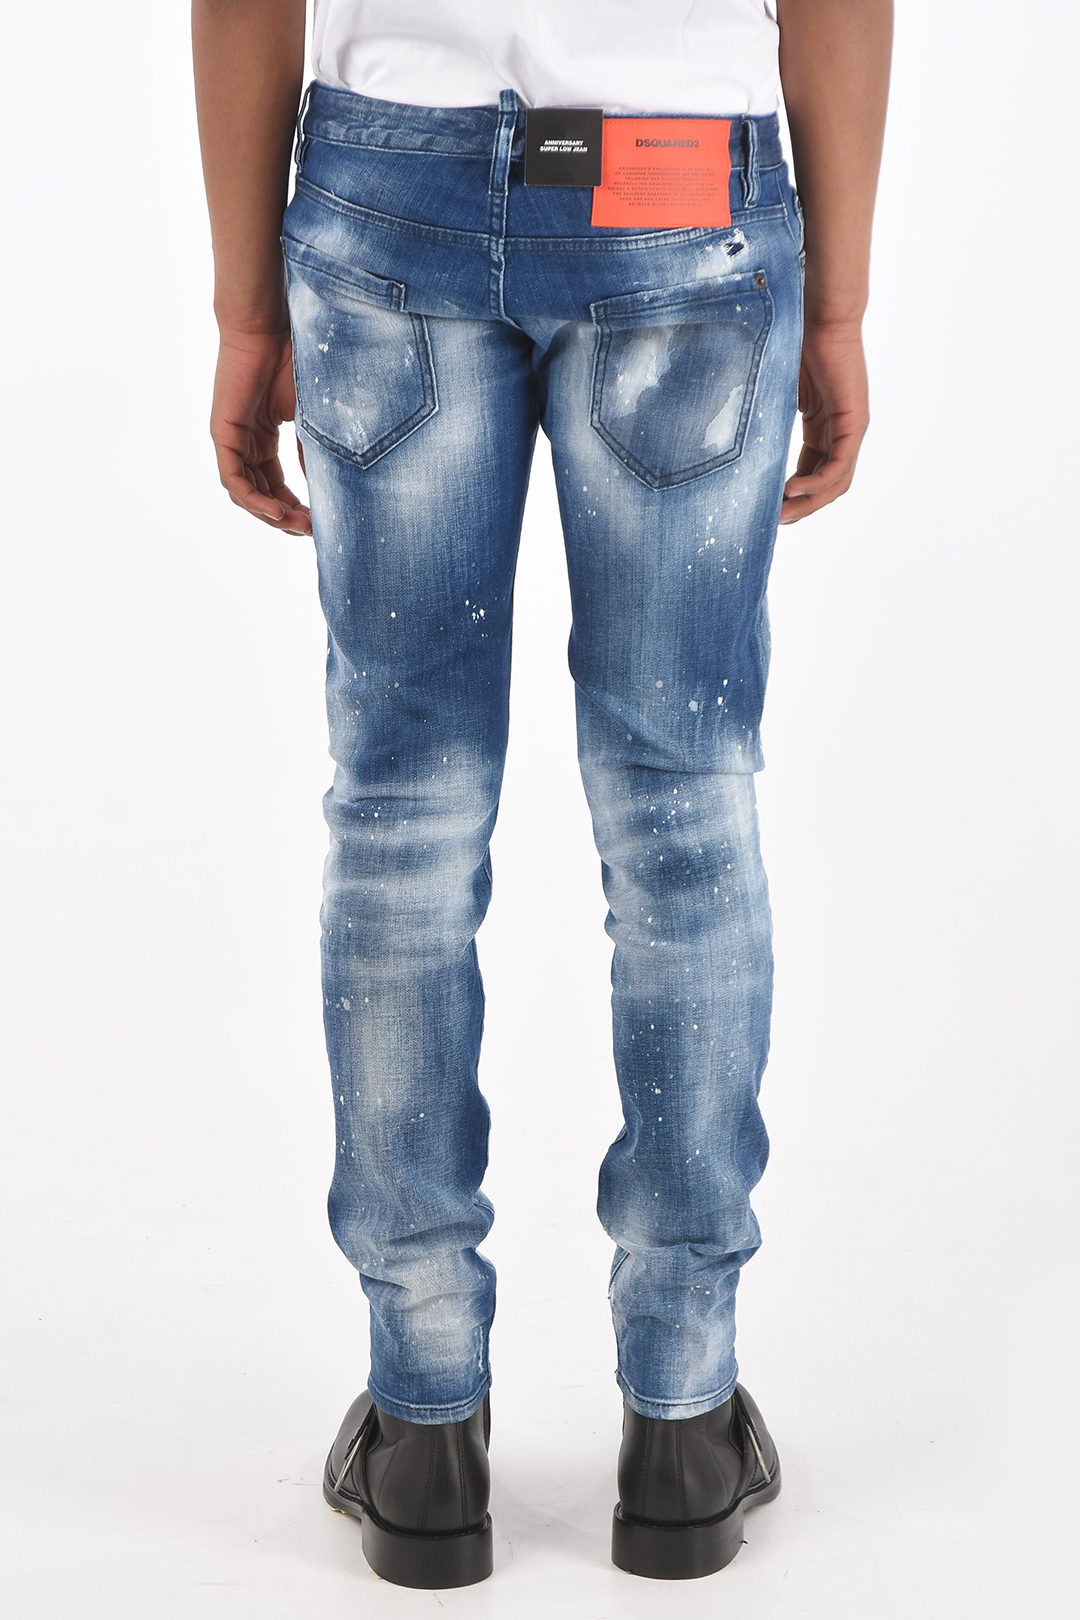 Er is behoefte aan neef speer Dsquared2 15,5cm Low rise ANNIVERSARY SUPER LOW vintage effect jeans men -  Glamood Outlet